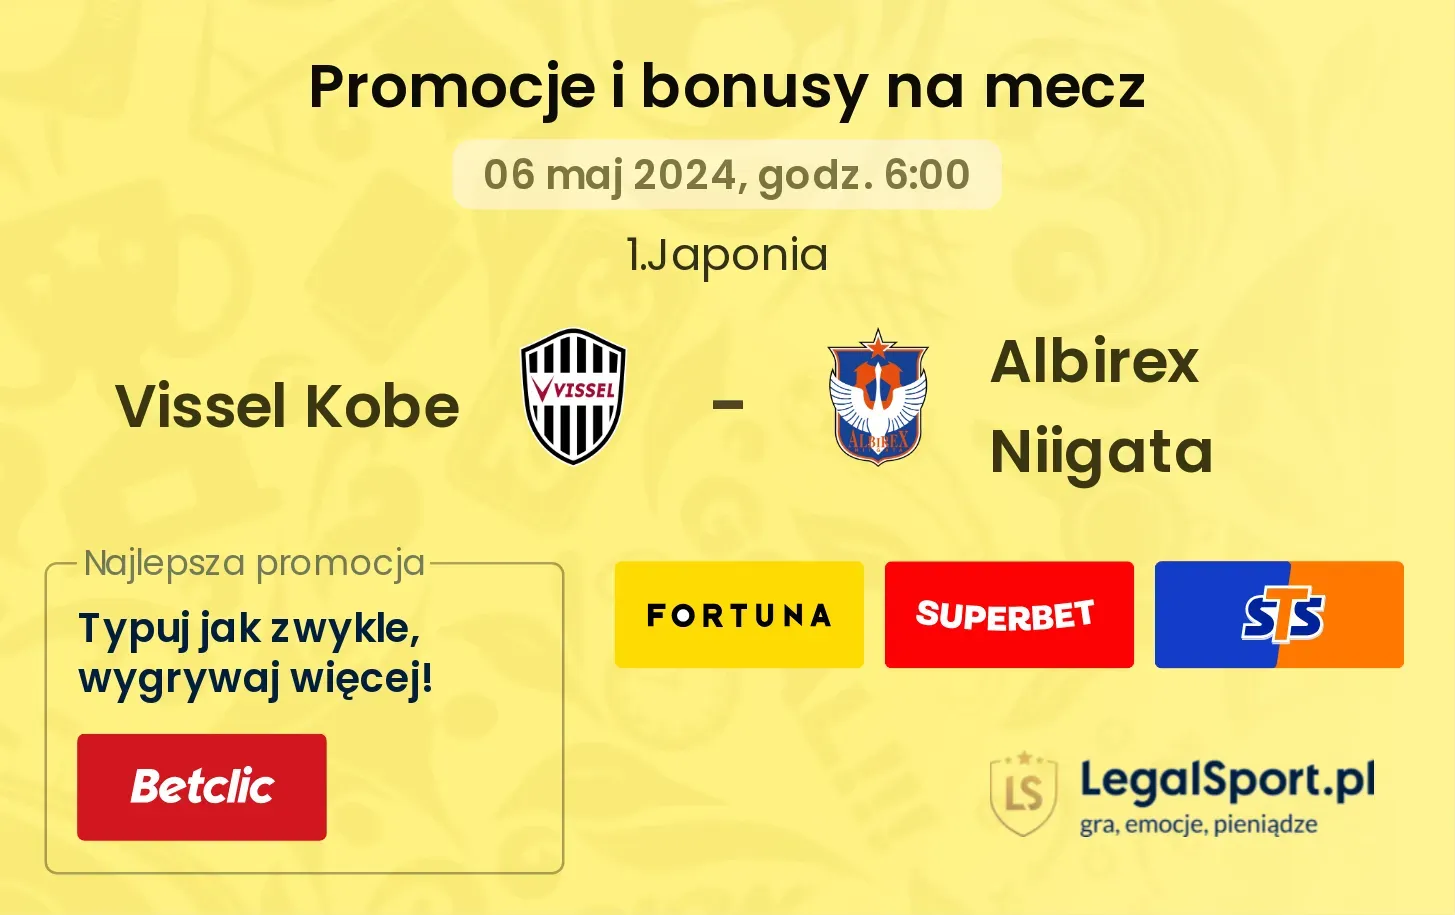 Vissel Kobe - Albirex Niigata bonusy i promocje (06.05, 06:00)